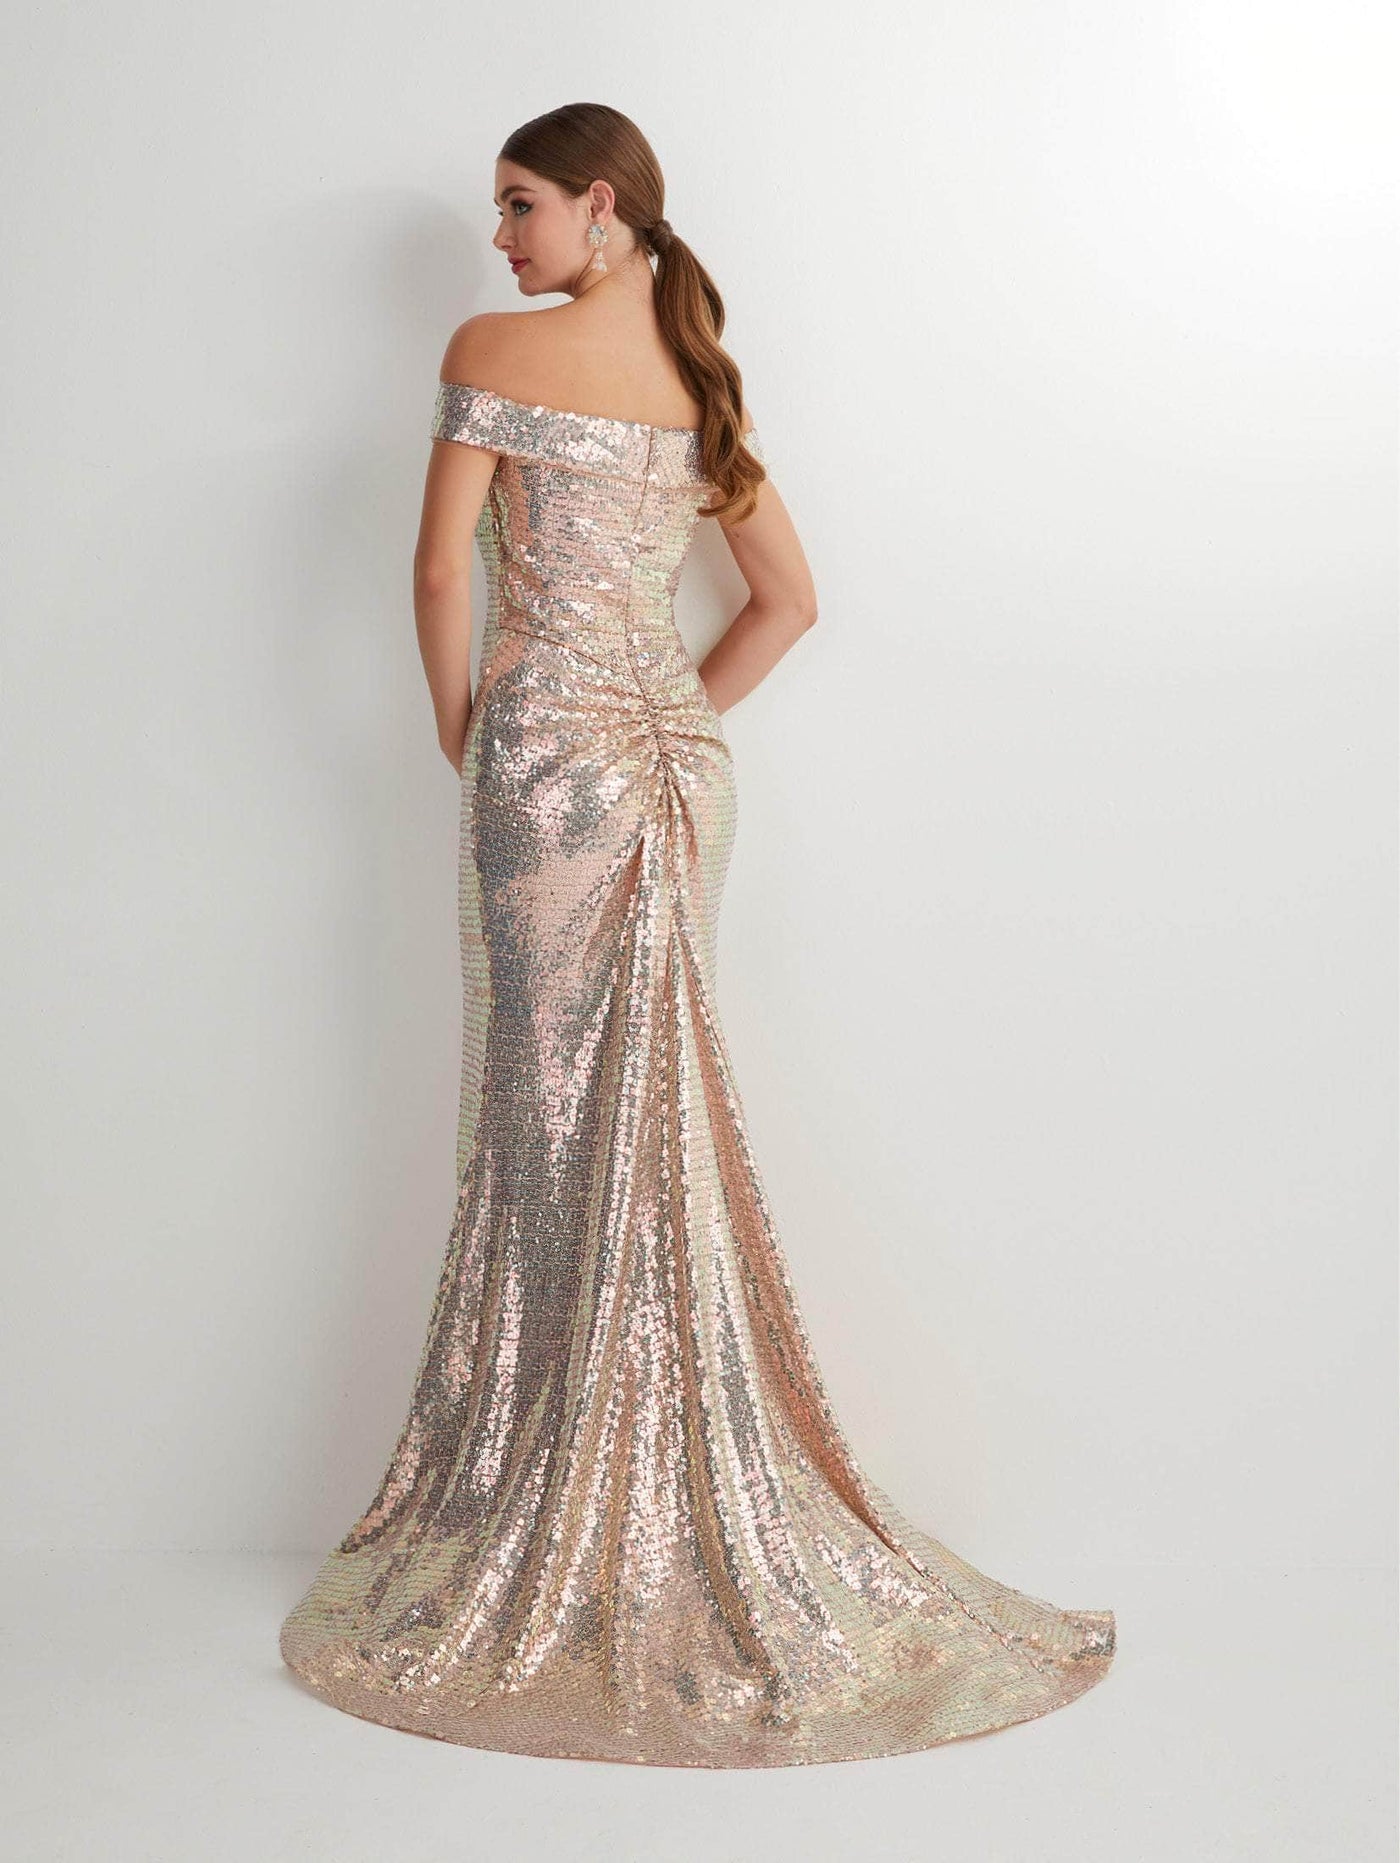 Studio 17 Prom 12911 - Off-Shoulder Sequin Evening Gown Evening Gown